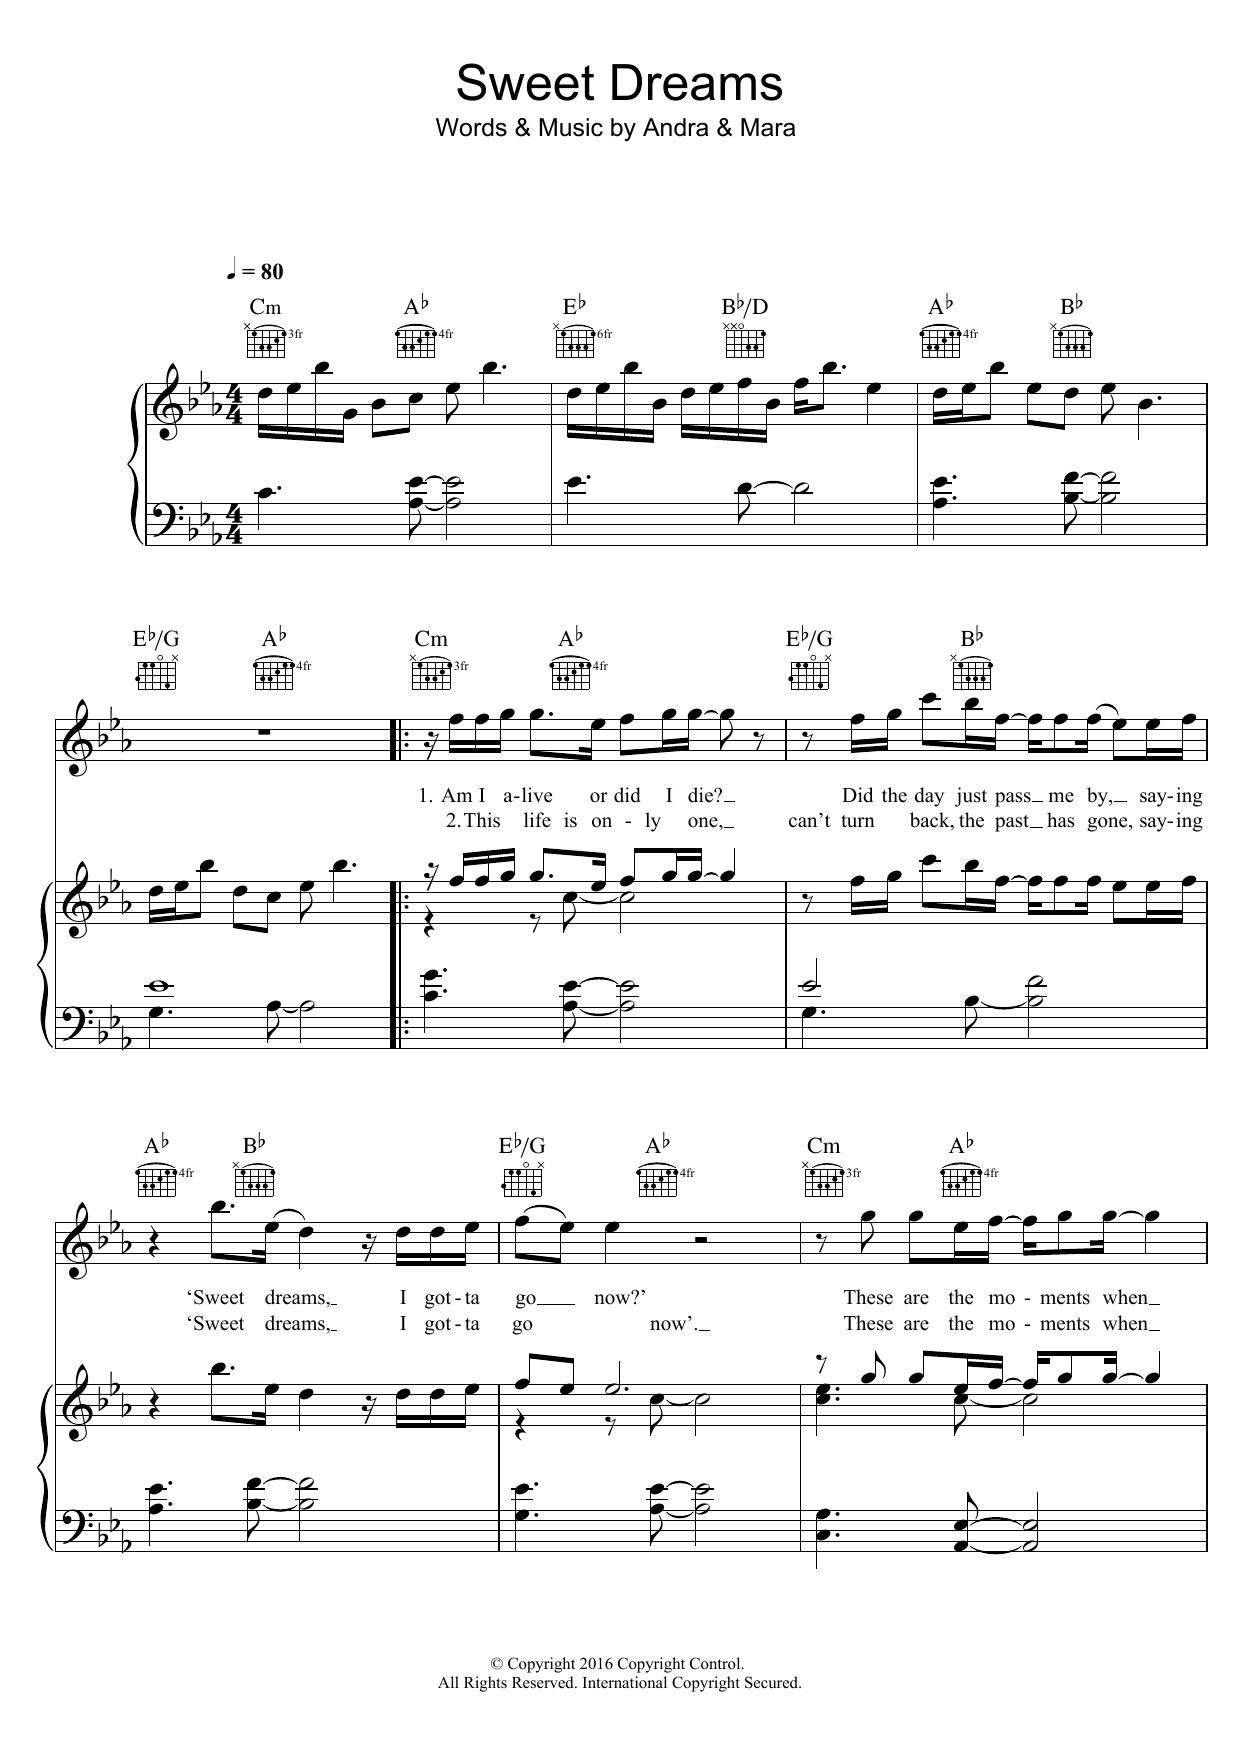 Andra & Mara Sweet Dreams Sheet Music Notes & Chords for Piano, Vocal & Guitar (Right-Hand Melody) - Download or Print PDF